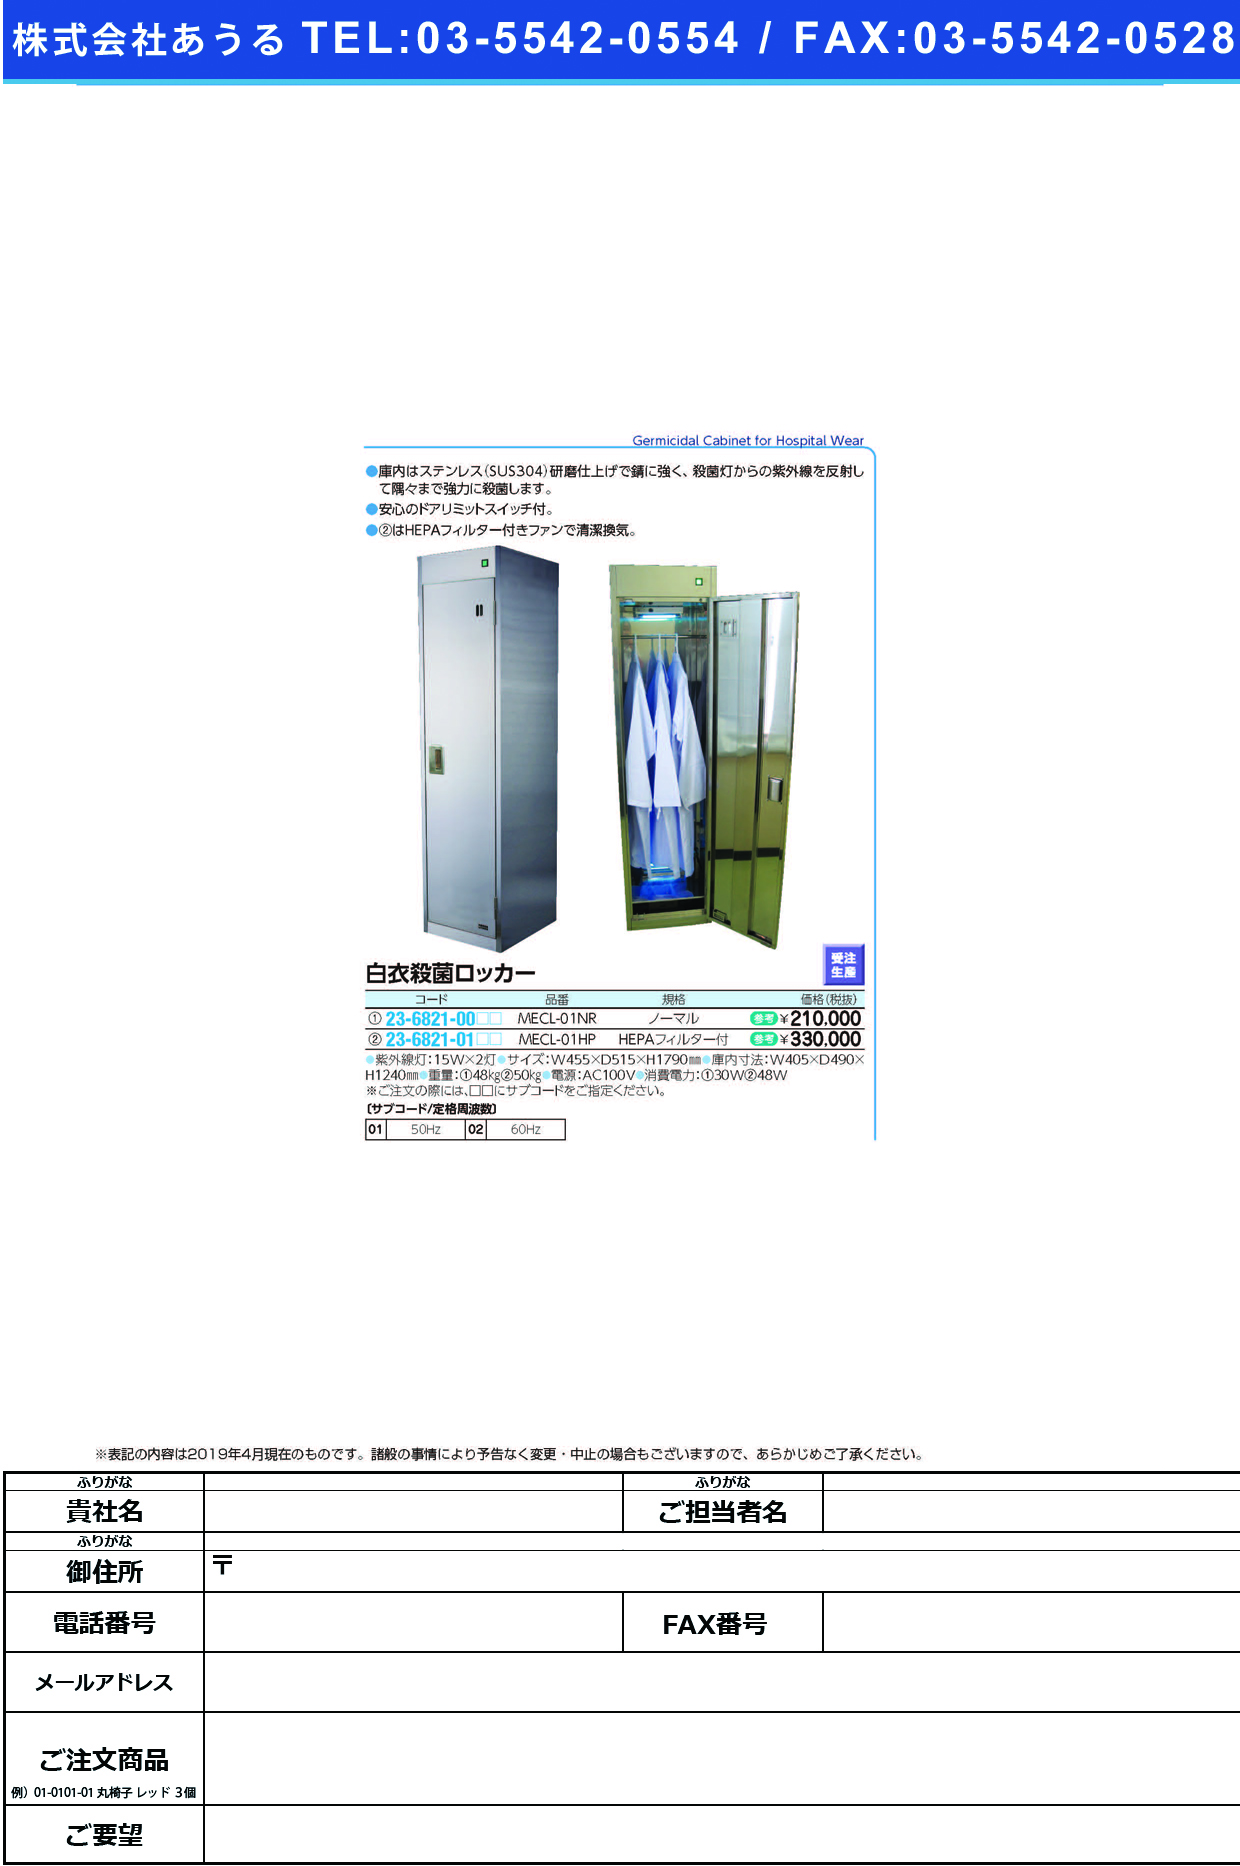 (23-6821-01)白衣殺菌ロッカー MECL-01HP(HEPAﾌｨﾙﾀｰ) ﾊｸｲｻｯｷﾝﾛｯｶｰ ６０Ｈｚ【1台単位】【2019年カタログ商品】